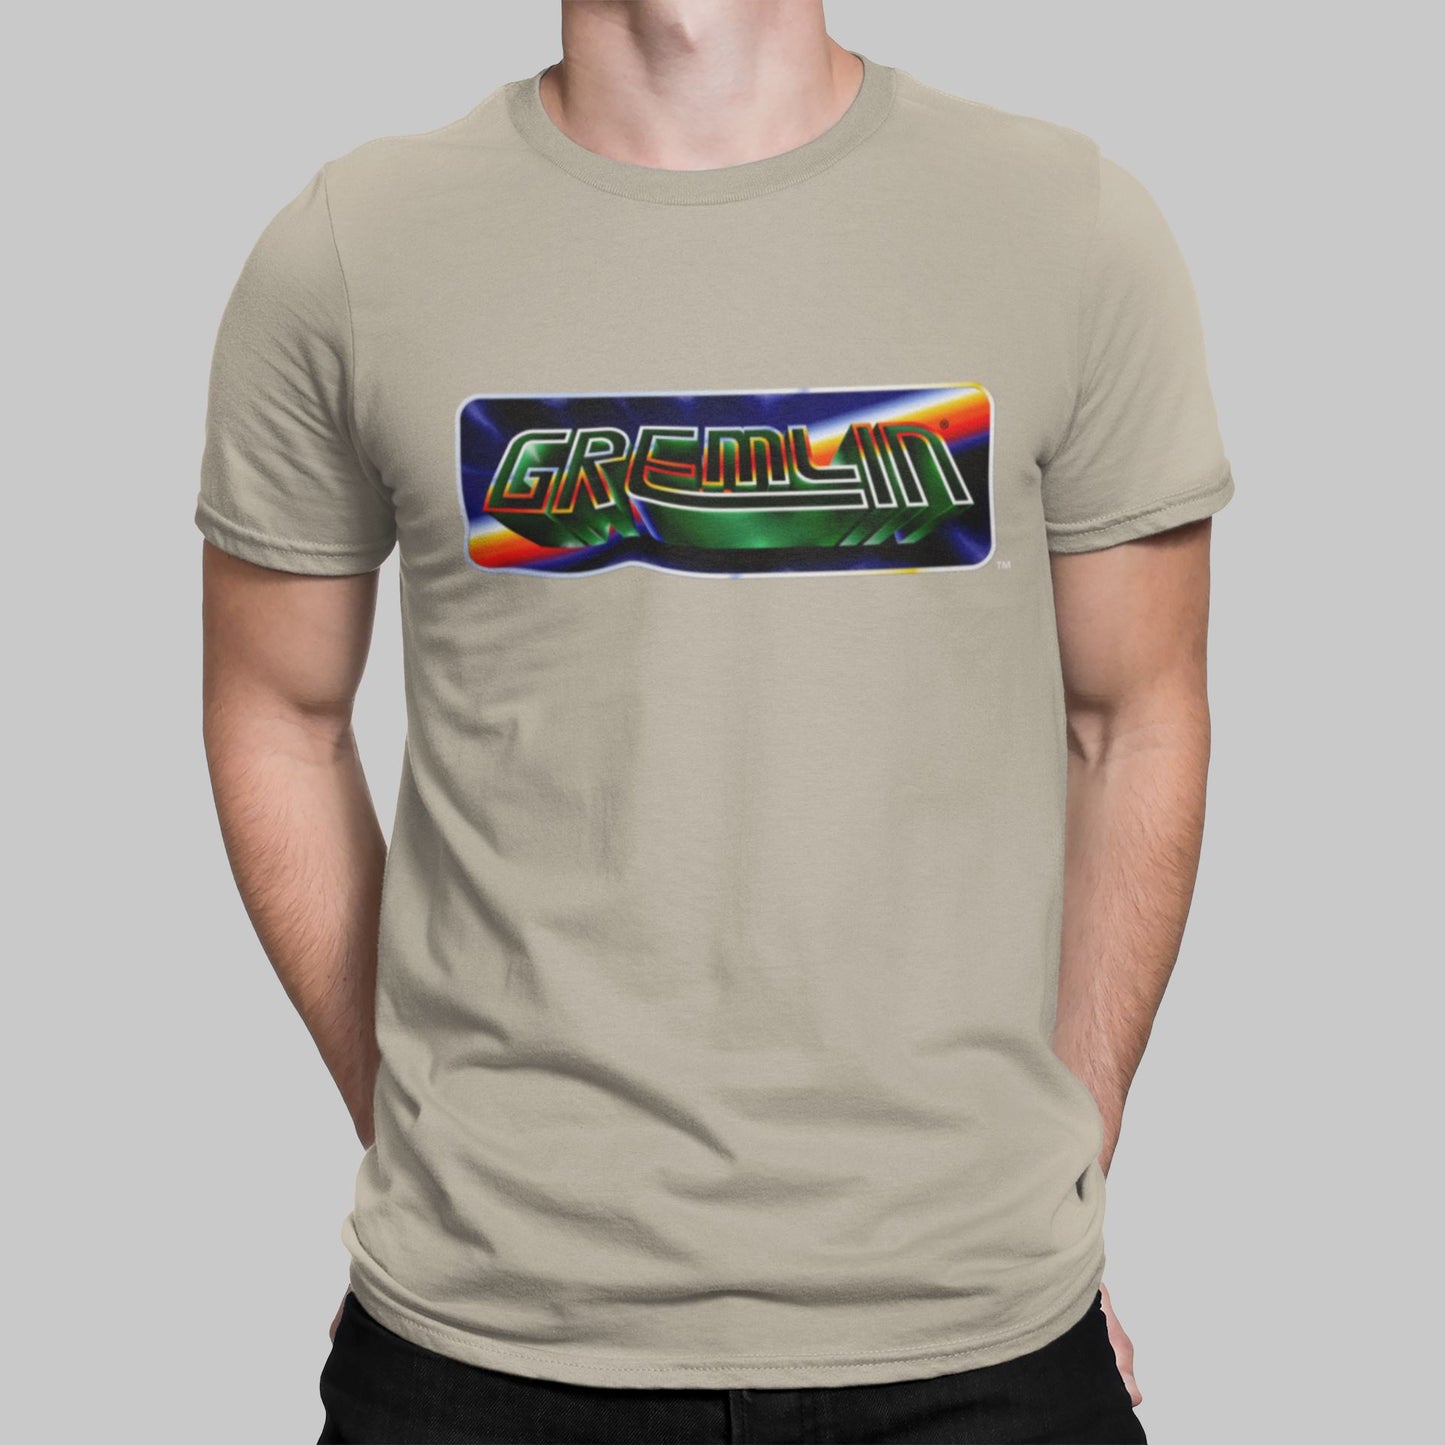 Gremlin Graphics Retro Gaming T-Shirt T-Shirt Seven Squared Small 34-36" Sand 